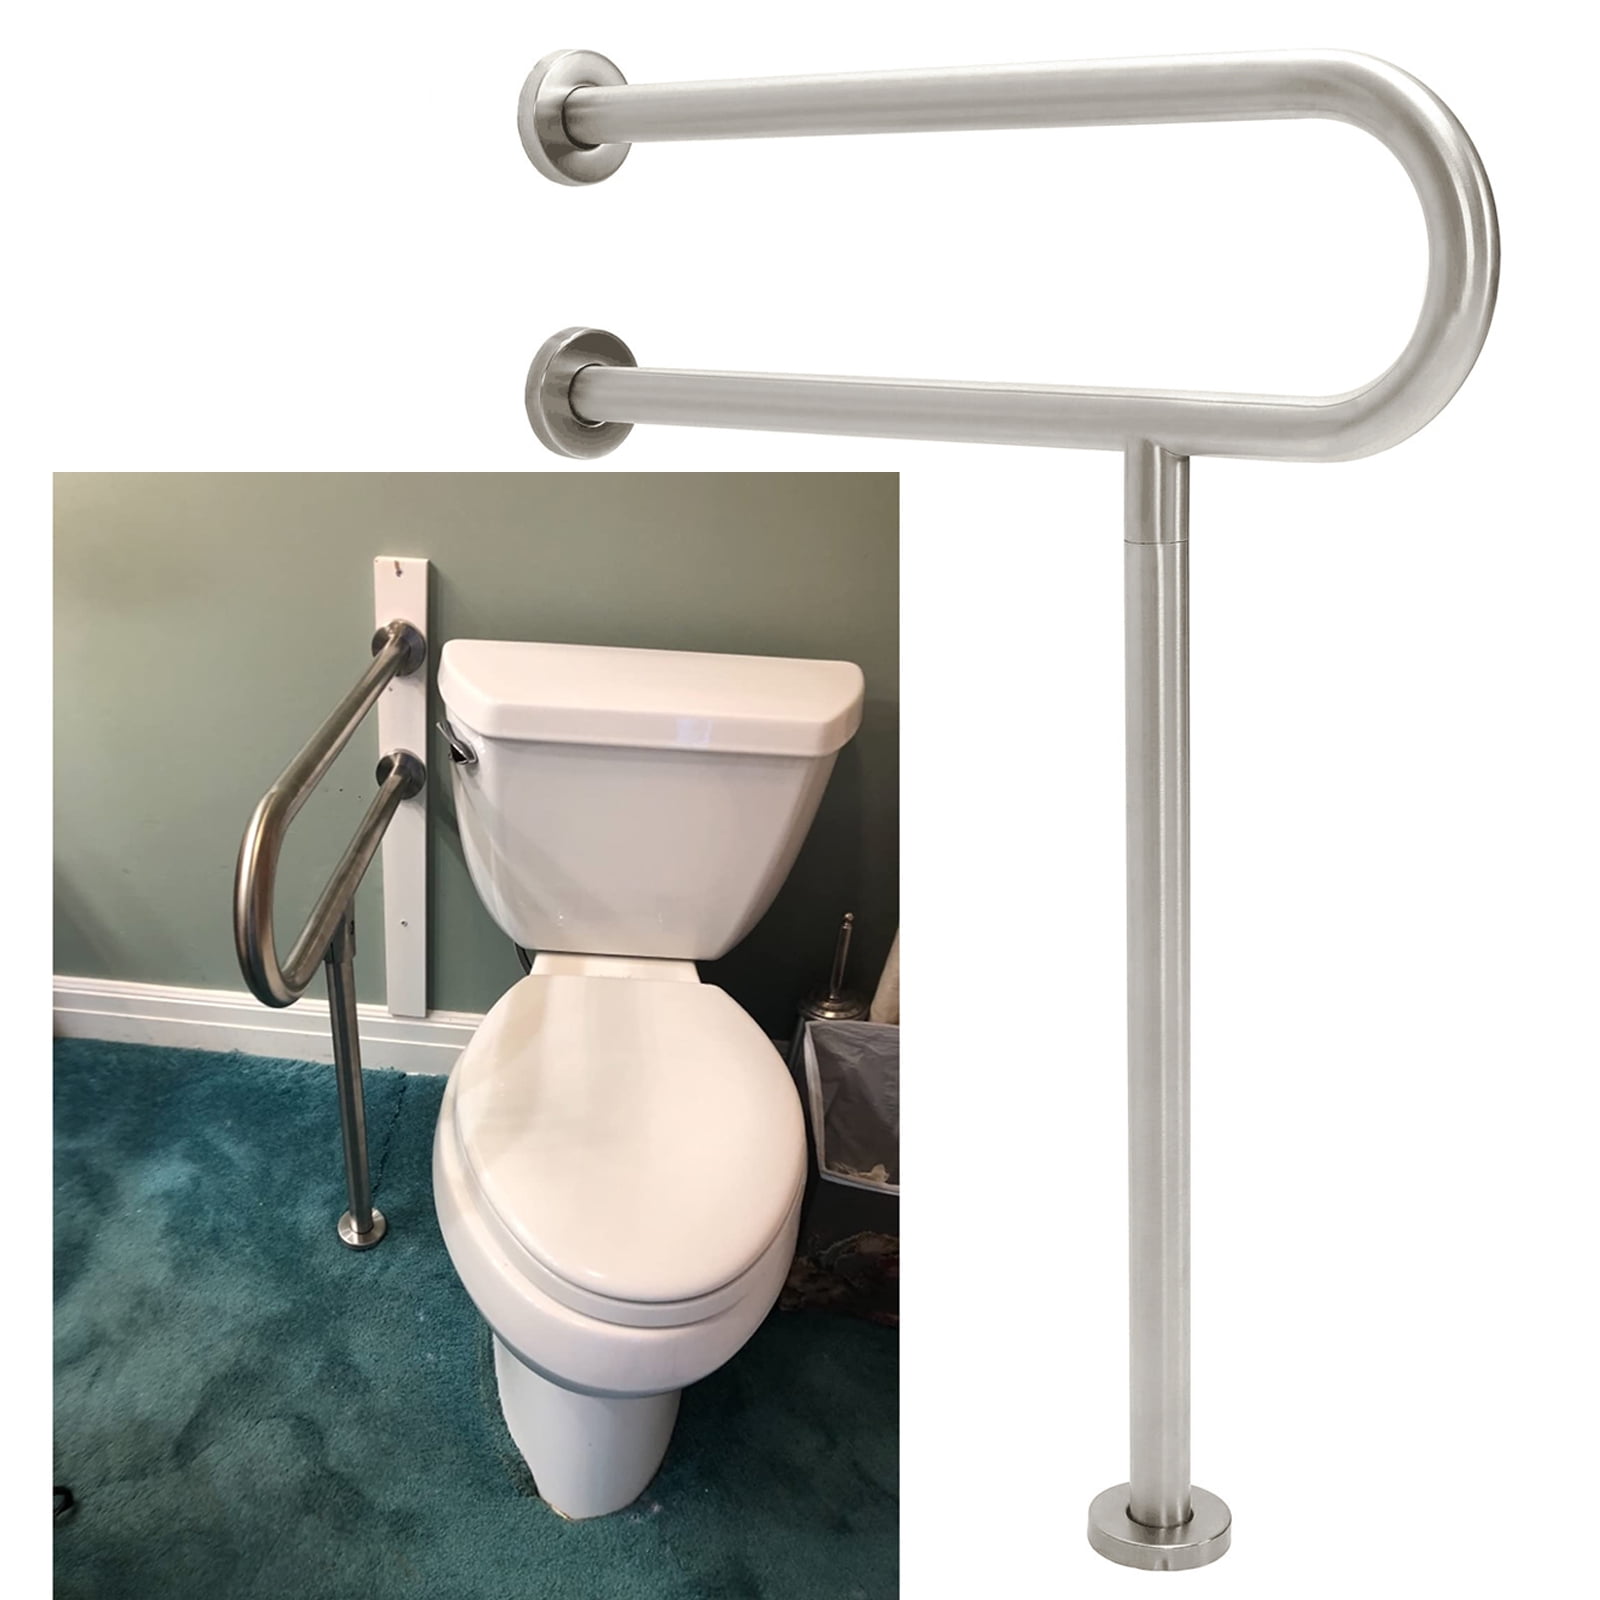 Grab Rails Handrail Bar Towel Rack for Stairway Bathroom Toilet Shower Bathtub Support Handle Safe Aid Grip Armrests for Disabled Elderly Outdoors 